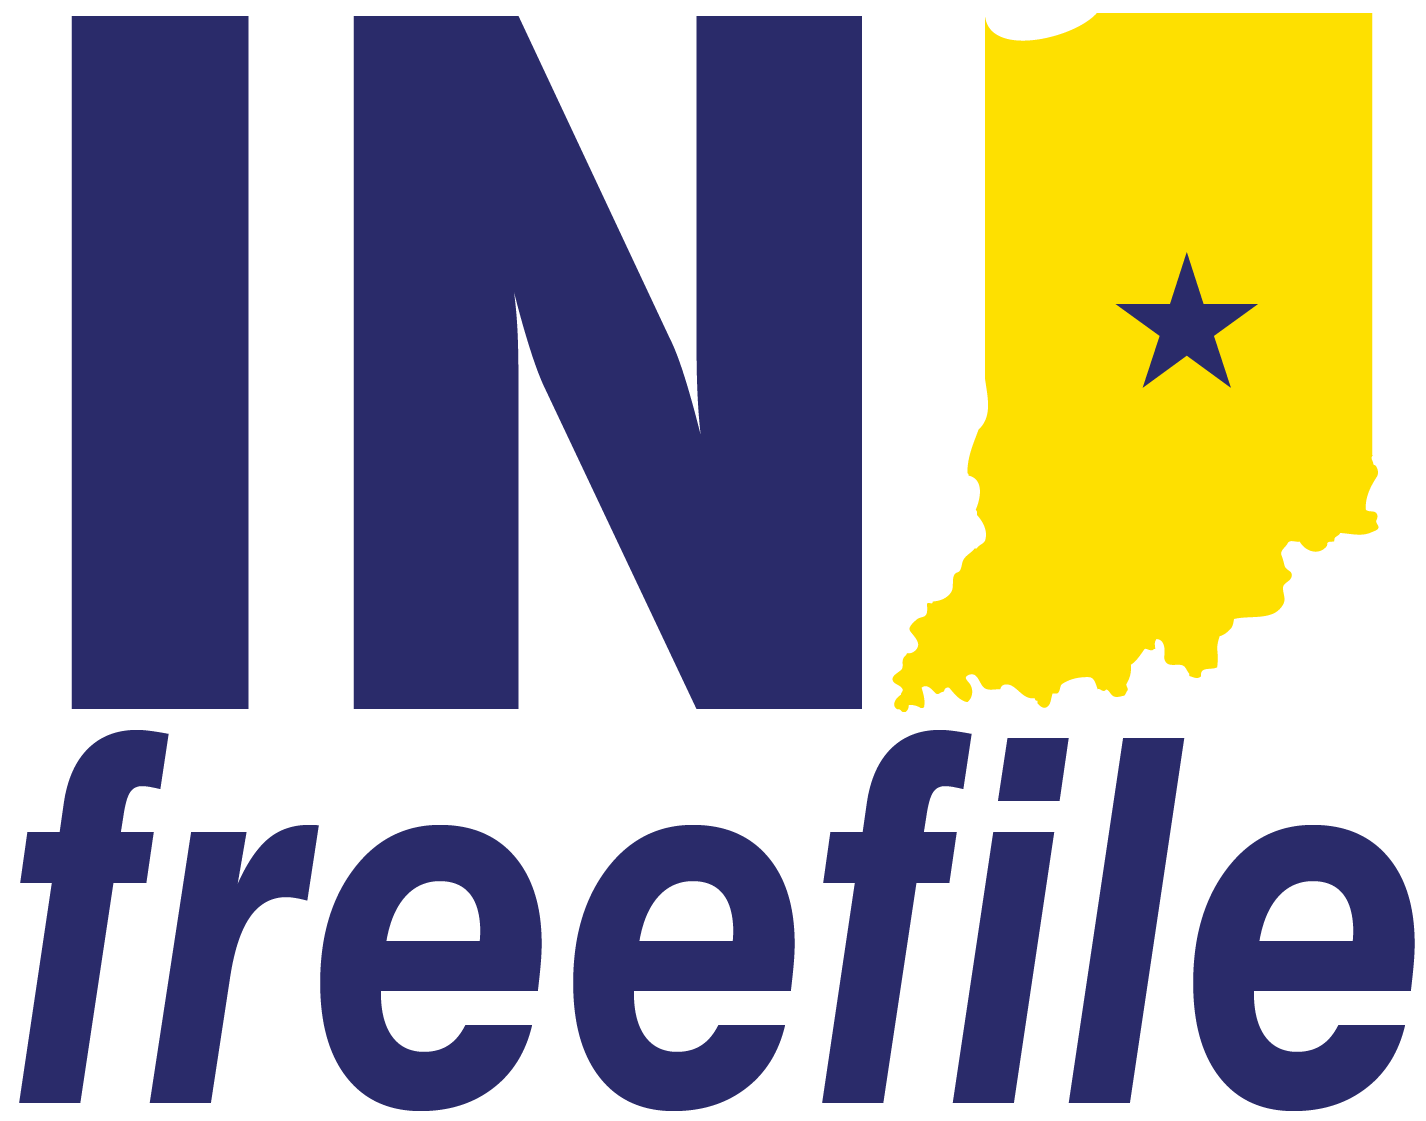 IN freefile logo